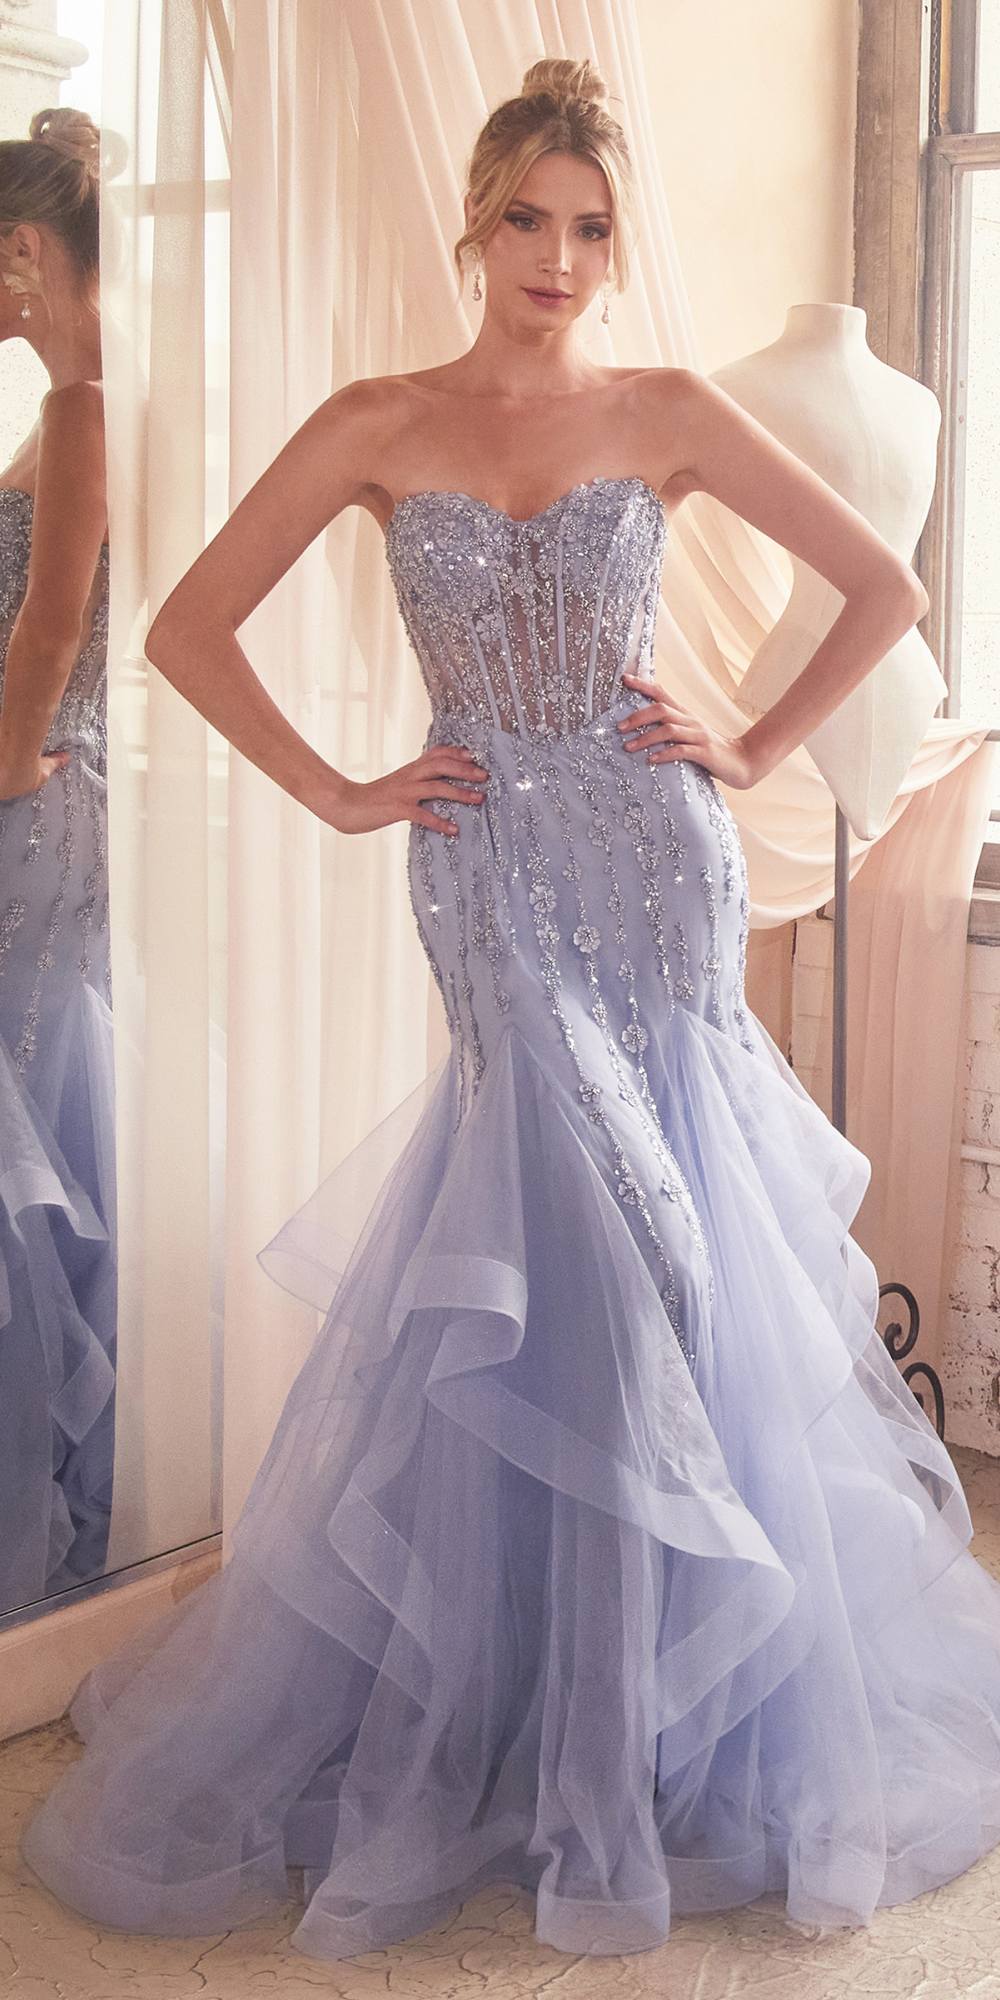 Ladivine CD332 Dress | Cinderella Divine CD332 Mermaid Gown